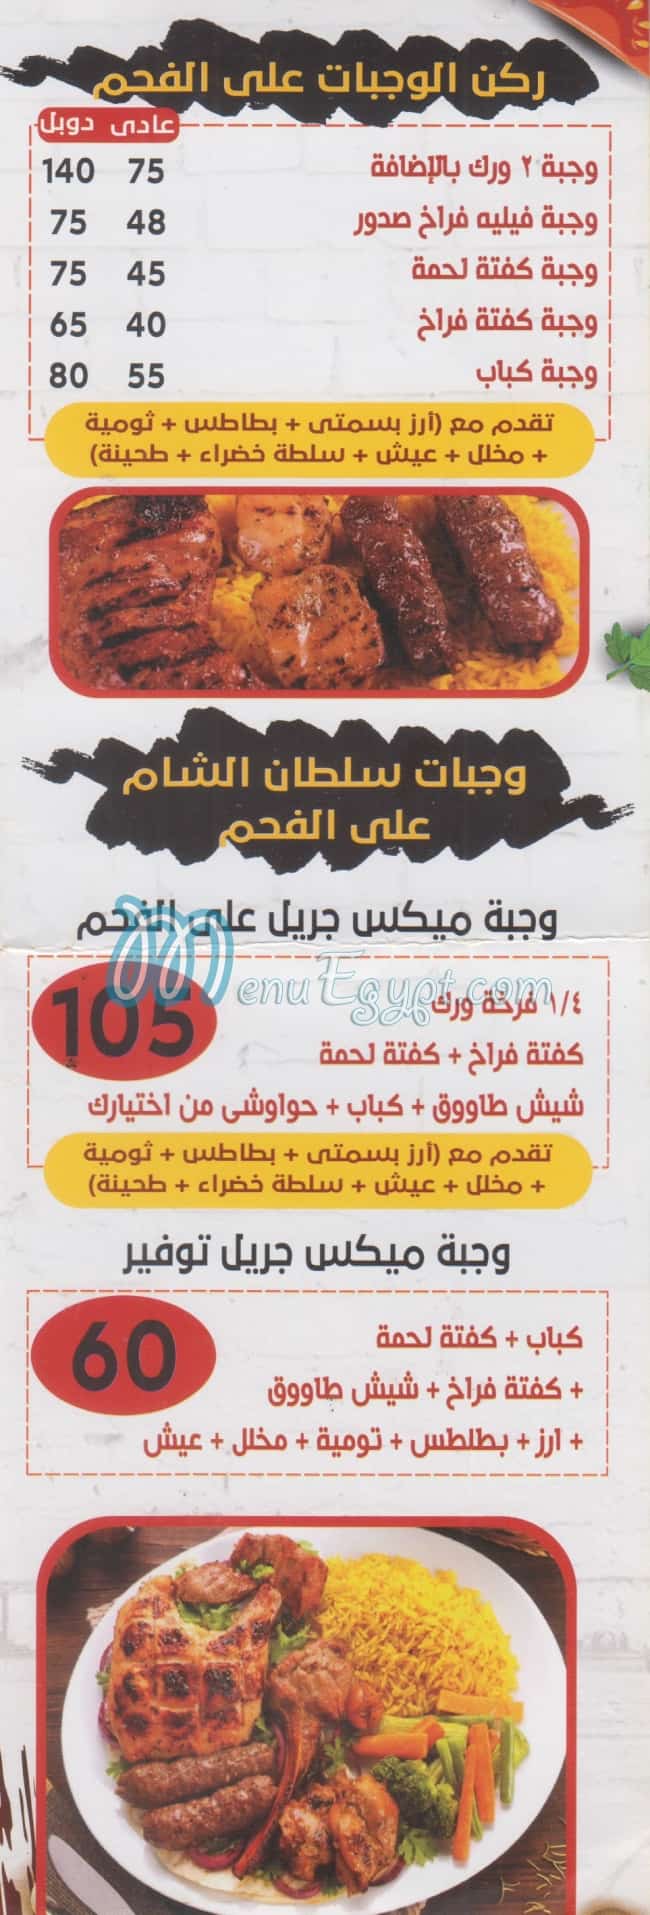 Soltan El sham Fesal menu prices